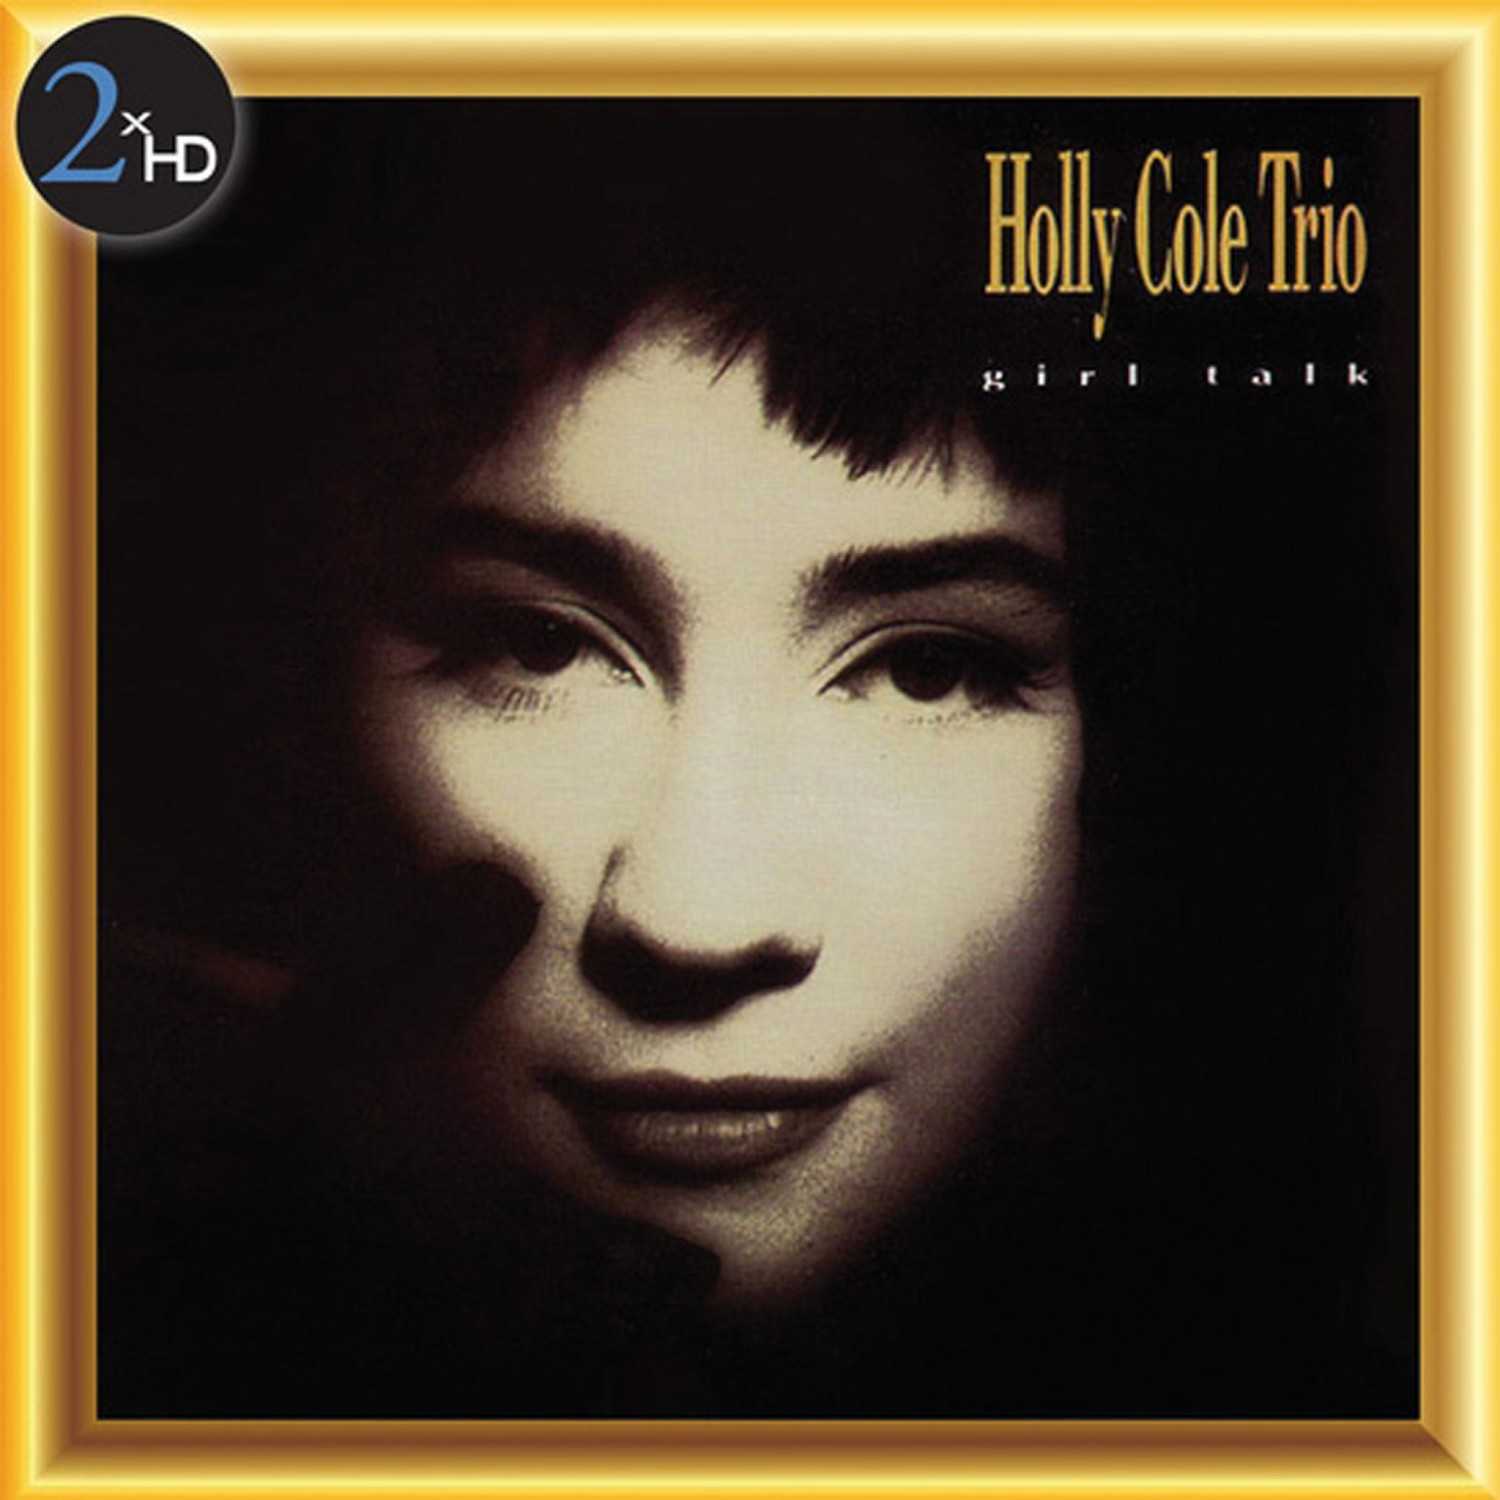 Download Holly Cole Trio - Girl Talk (2xHD) im Test, Bild 1